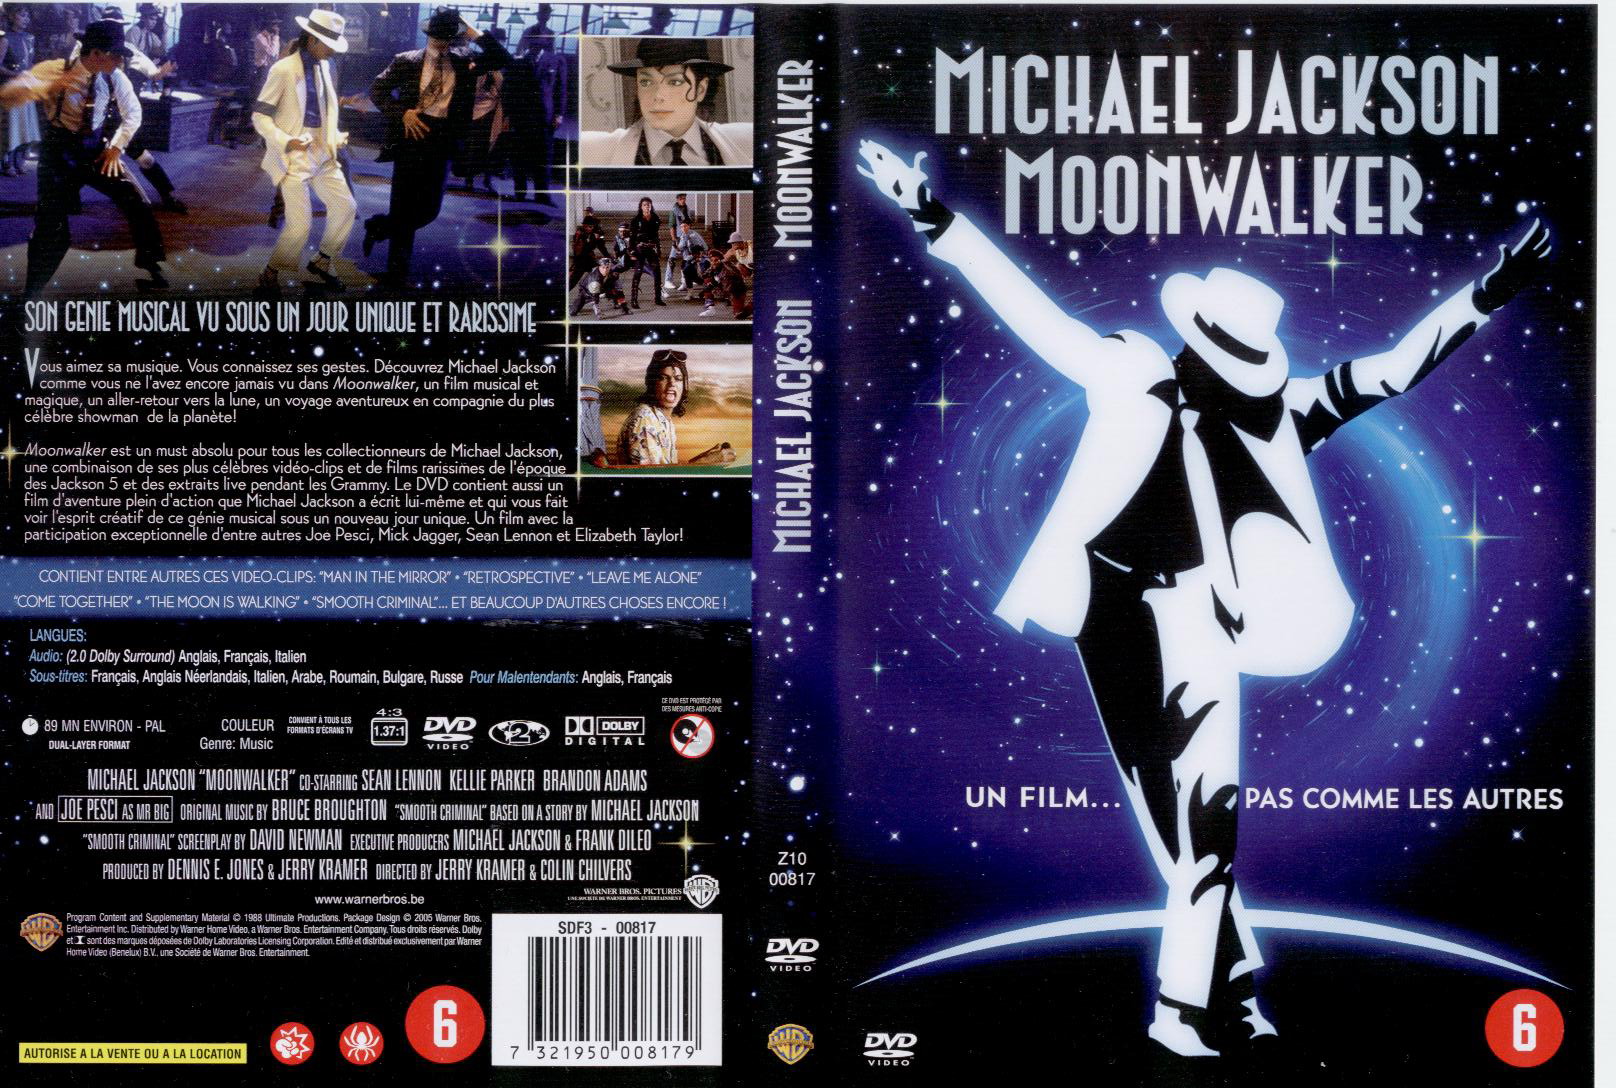 Jaquette DVD Michael Jackson Moonwalker